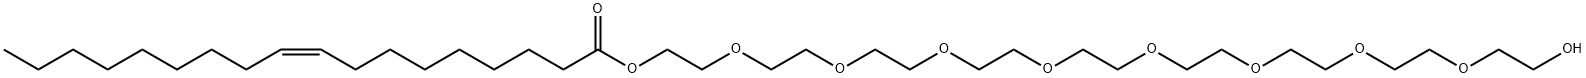 2-[2-[2-[2-[2-[2-[2-[2-(2-hydroxyethoxy)ethoxy]ethoxy]ethoxy]ethoxy]et hoxy]ethoxy]ethoxy]ethyl (Z)-octadec-9-enoate 结构式